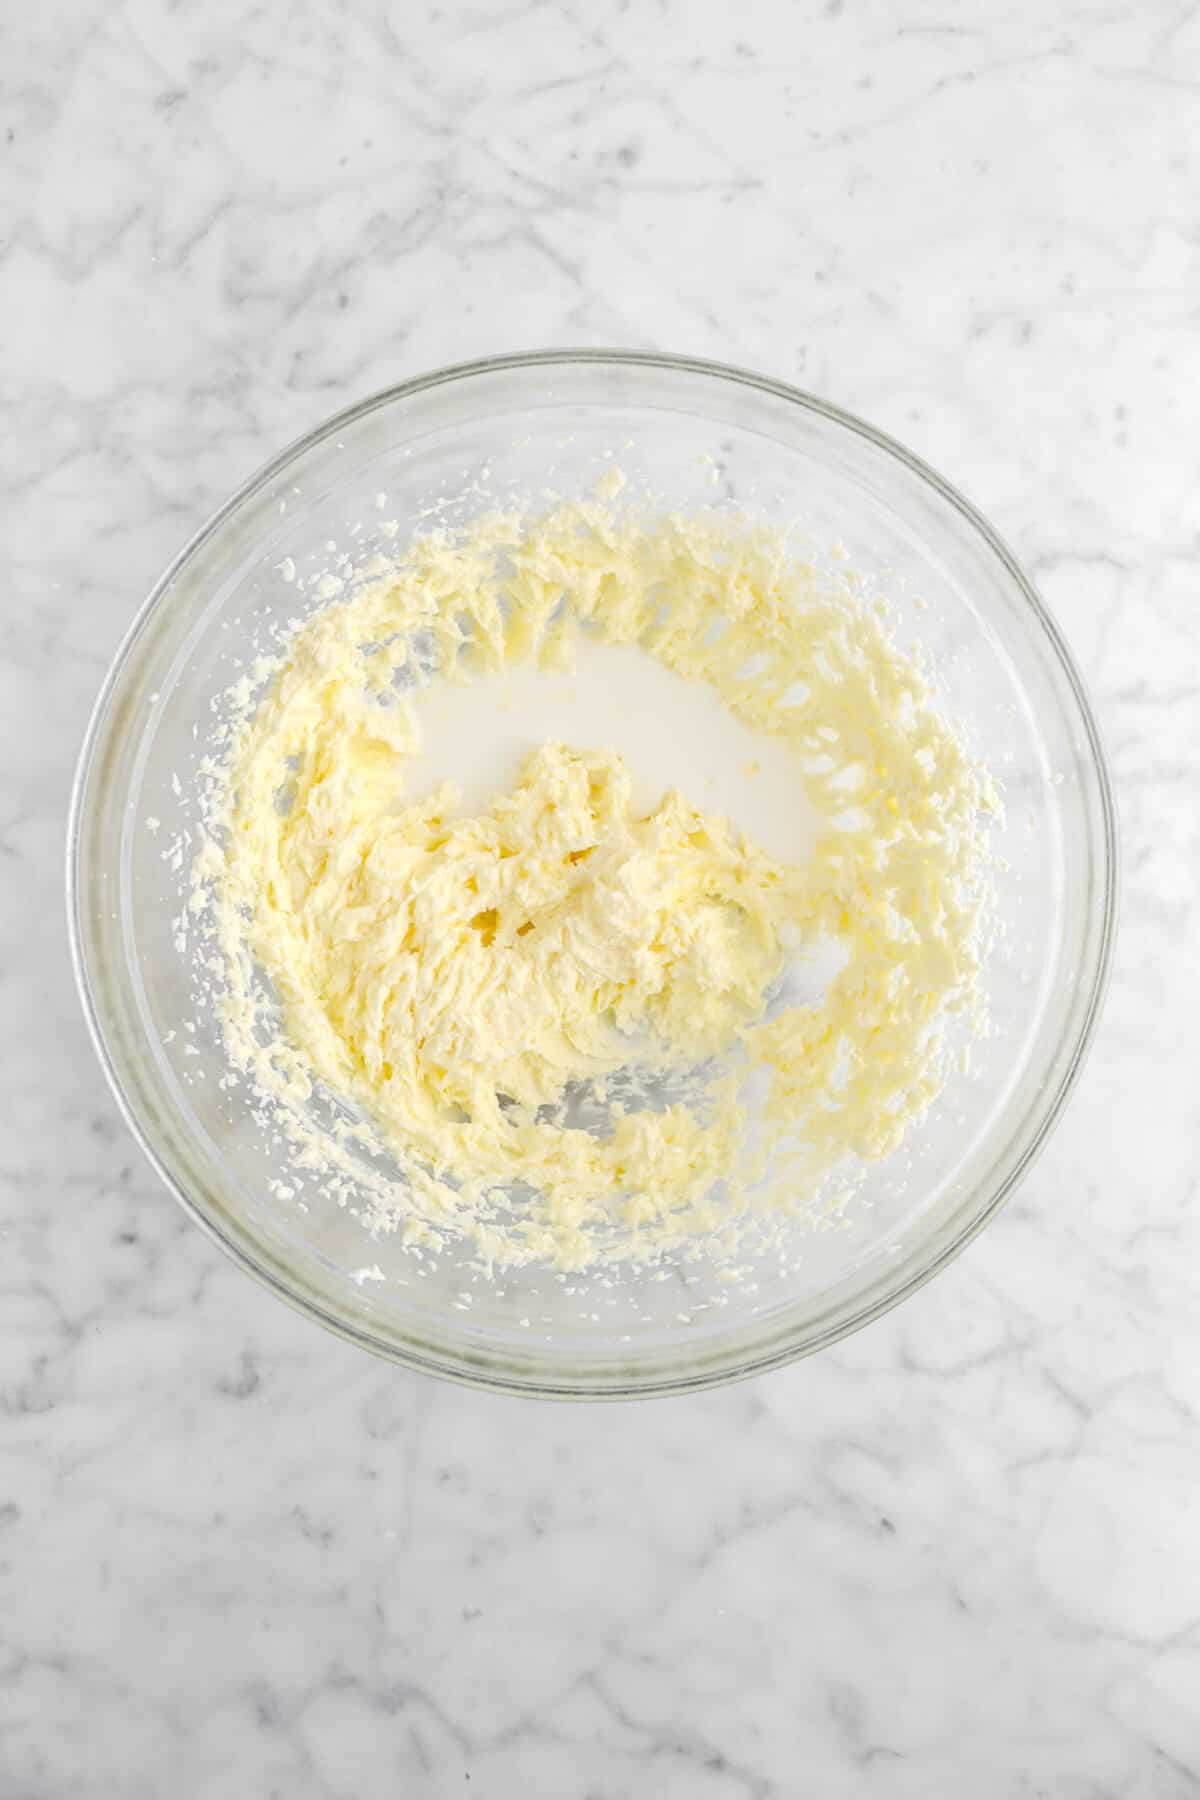 milk added to butter mixture